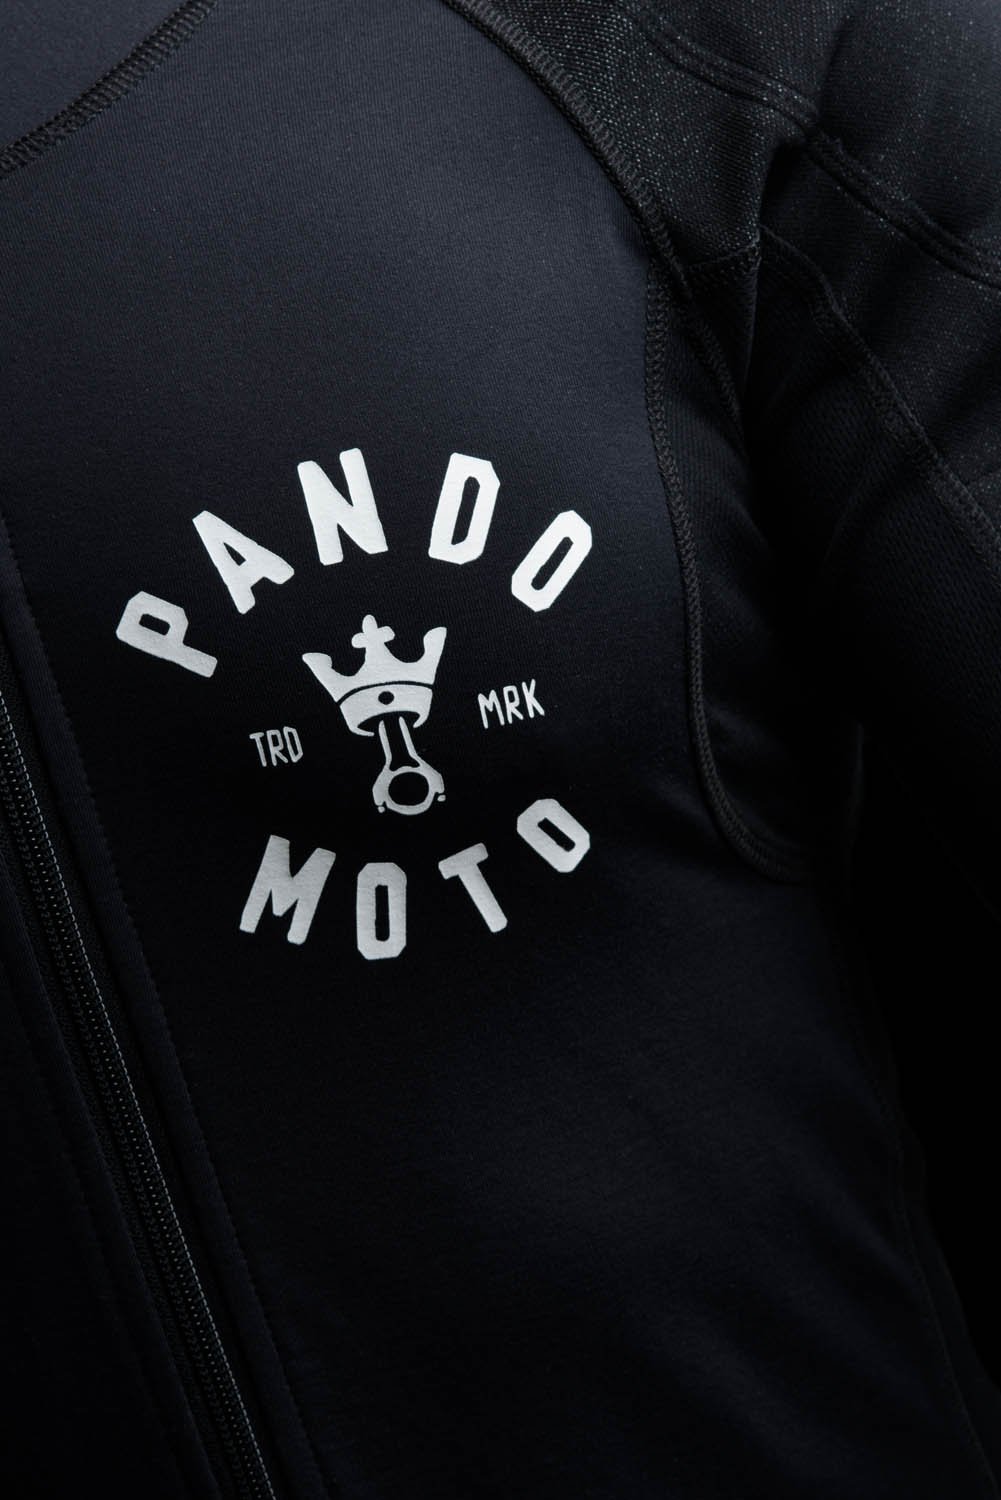 Pando Moto SHELL UH 01 Armored Shirt